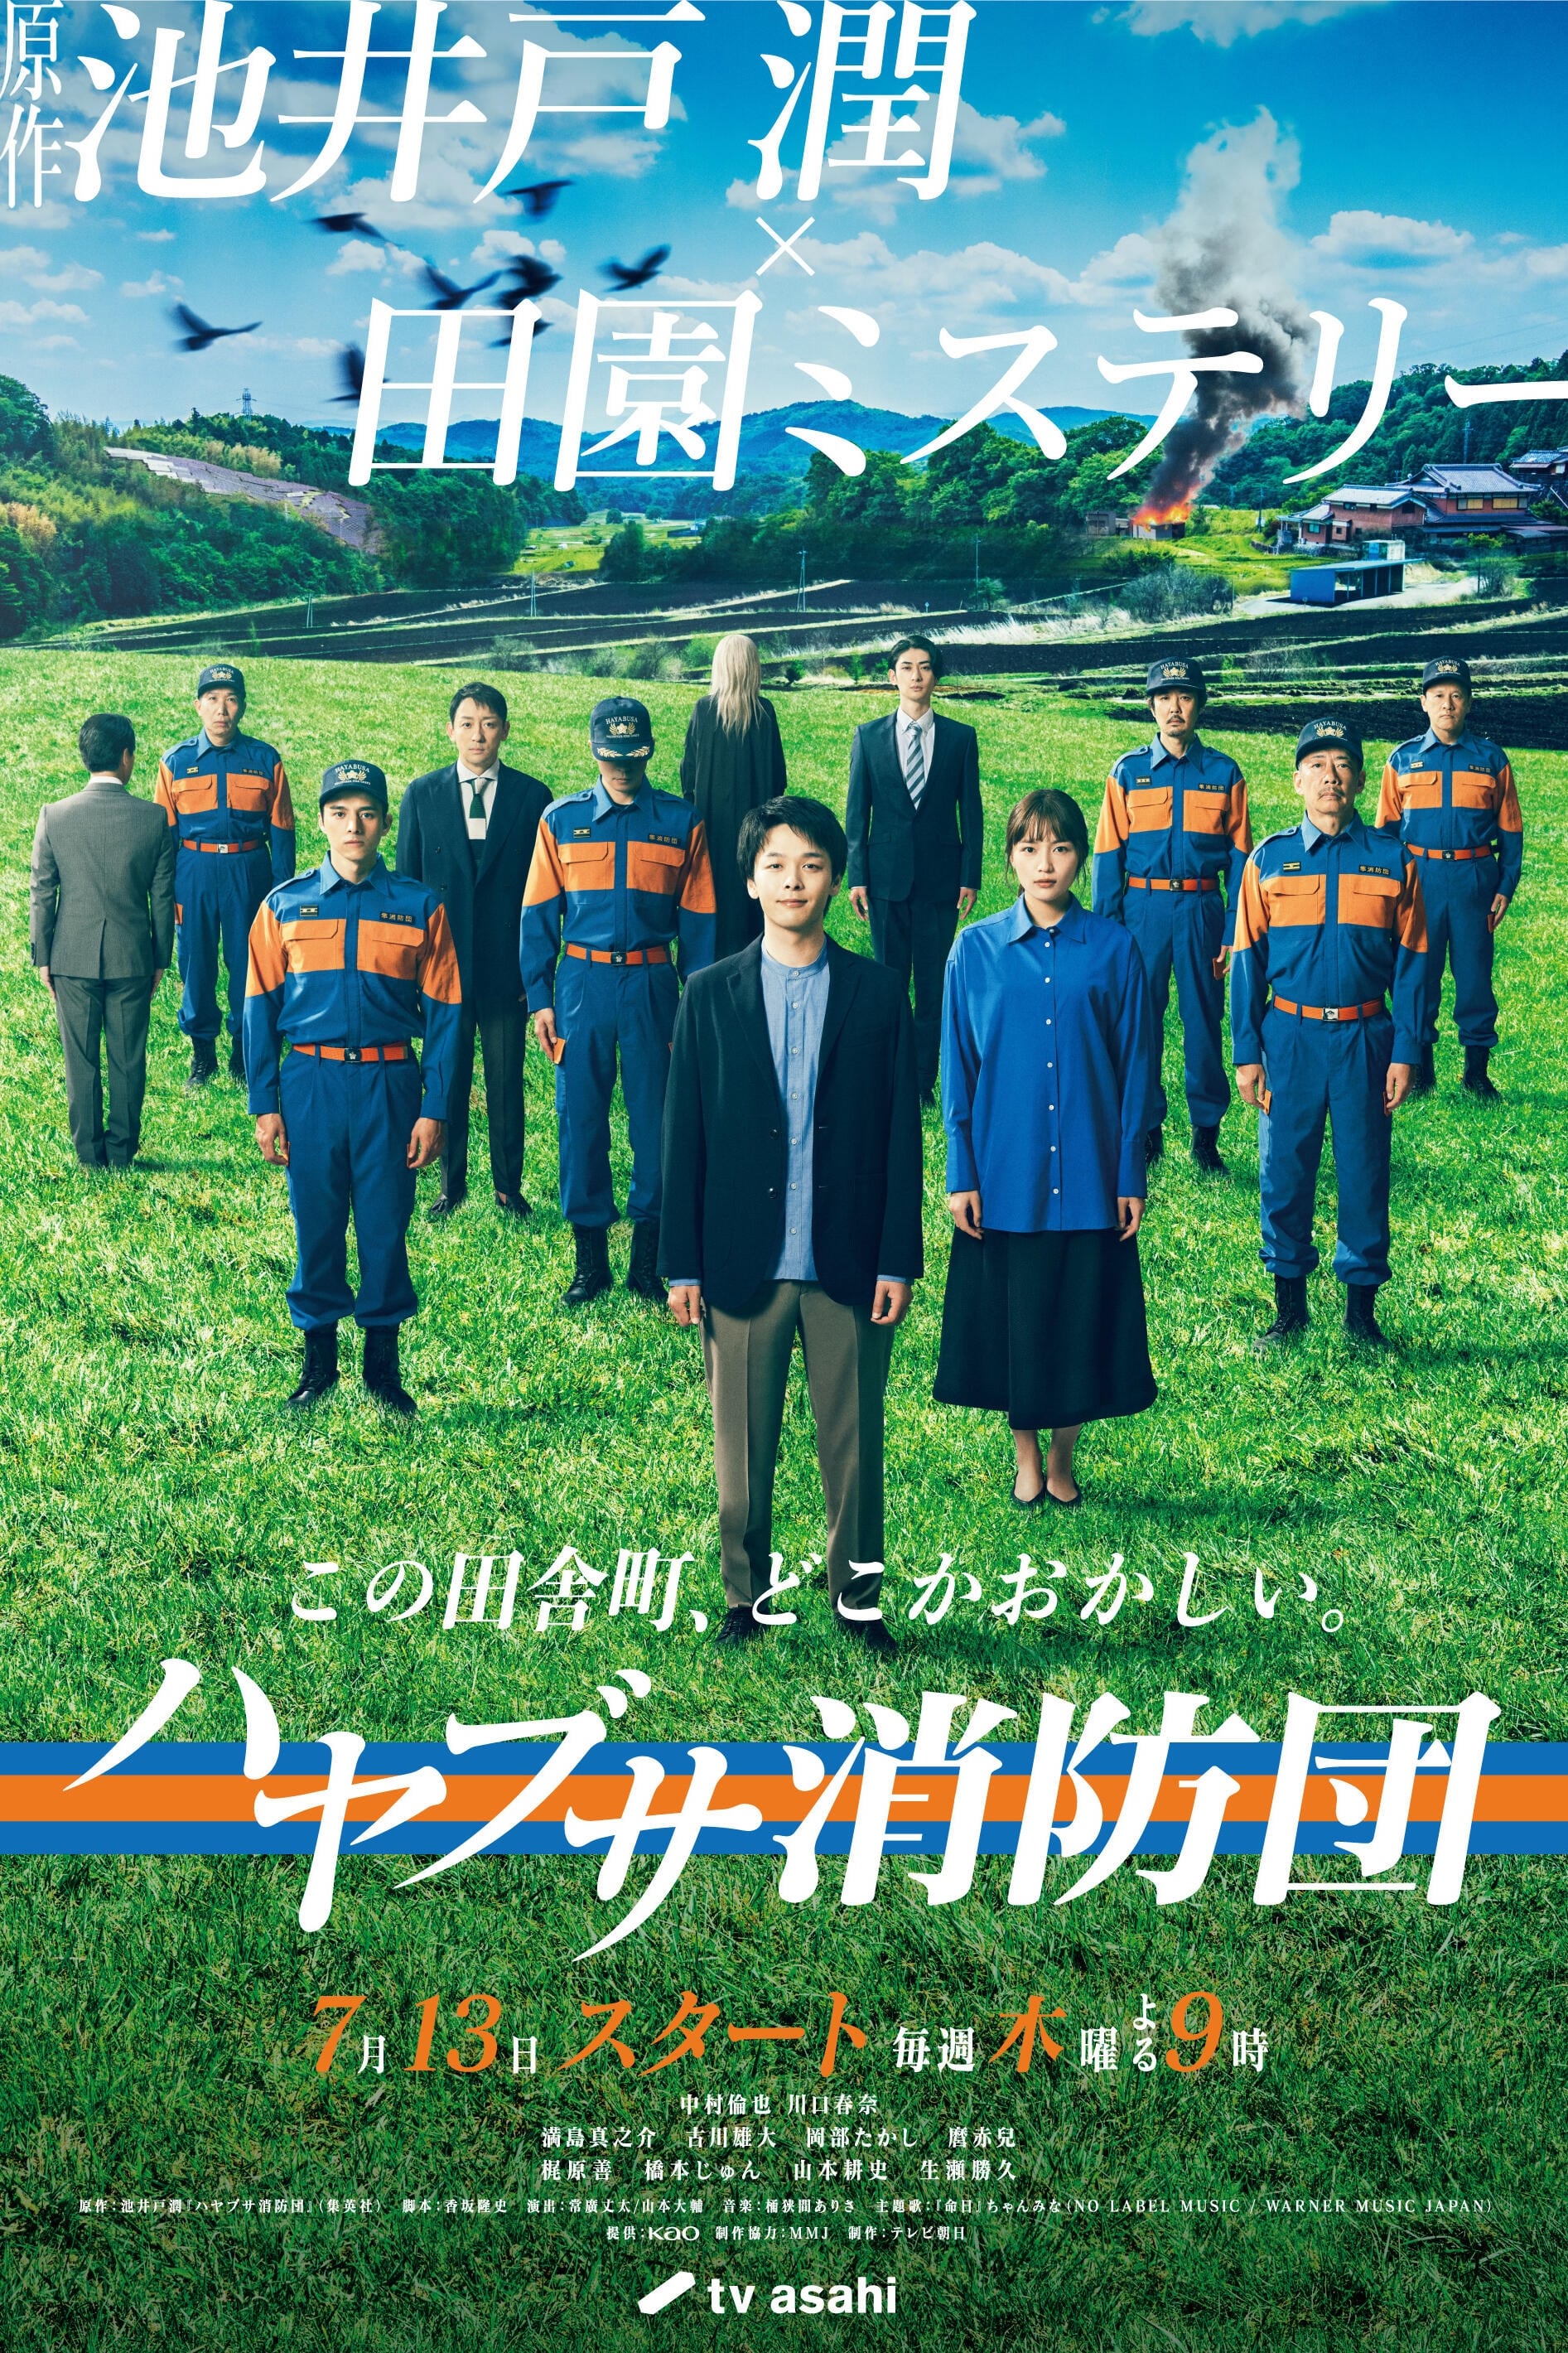 TV ratings for Hayabusa Shobodan (ハヤブサ消防団) in the United States. TV Asahi TV series